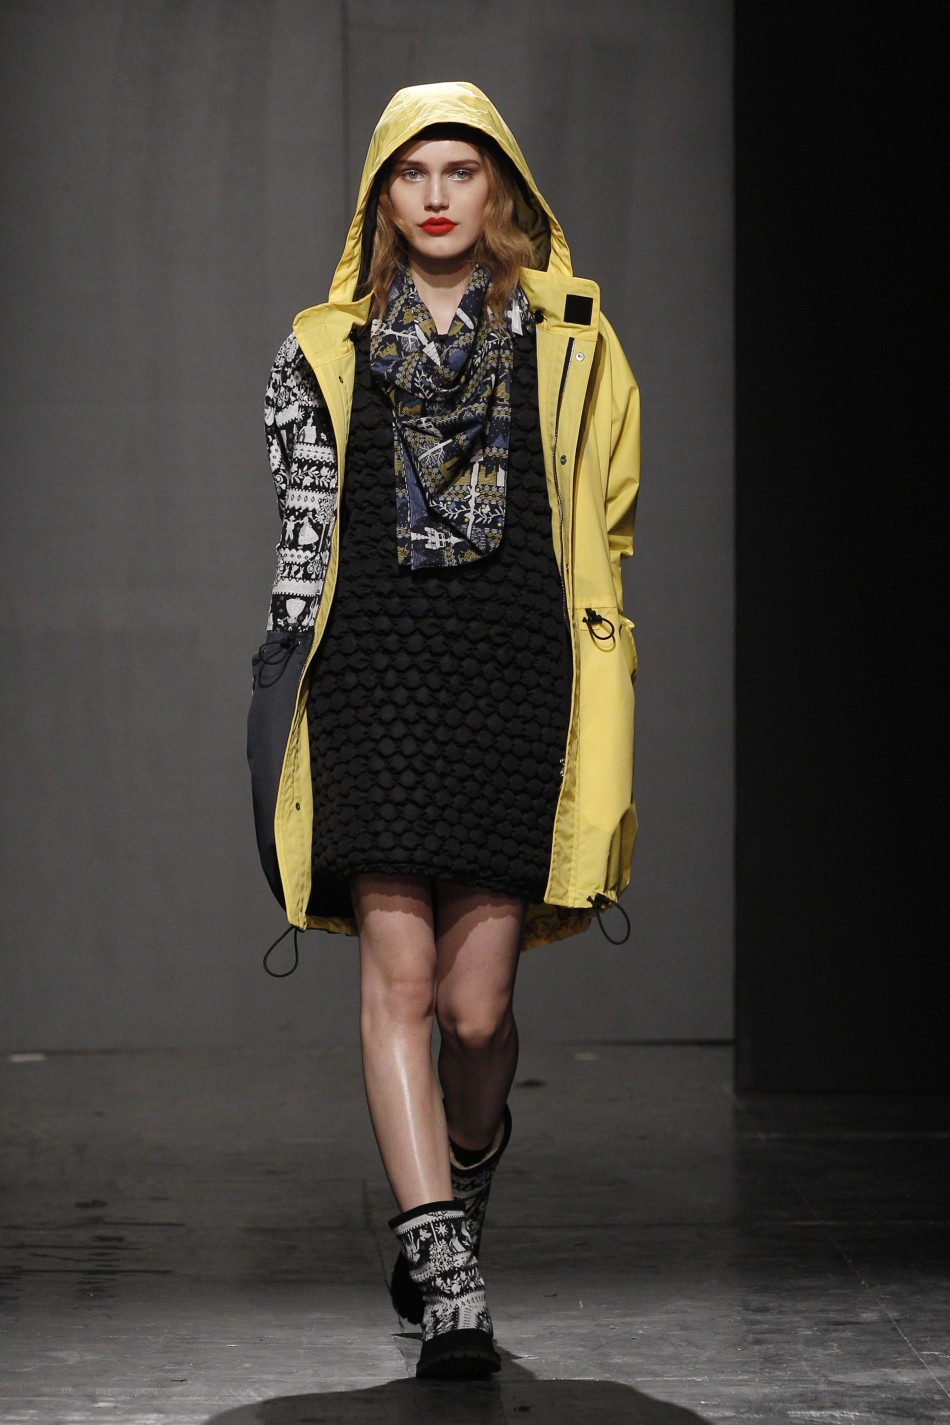 Top Models Karlie Kloss, Anja Rubik Kick-starts 2012 Paris Fashion Week